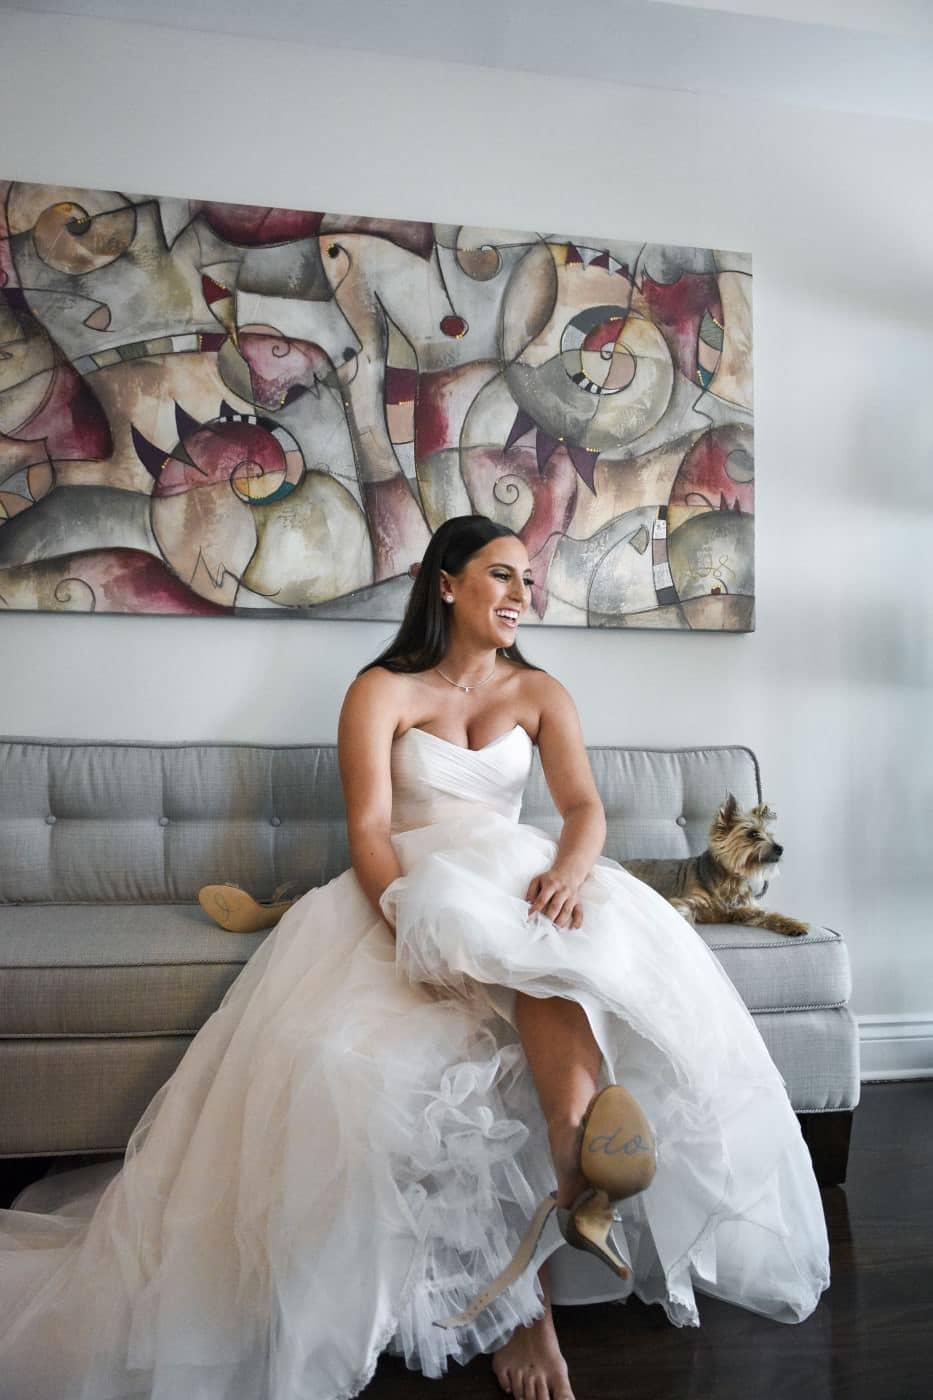 alexandra ben matlin jewish wedding mont blanc montreal laval dress bride getting ready york dog portrait shoes heels